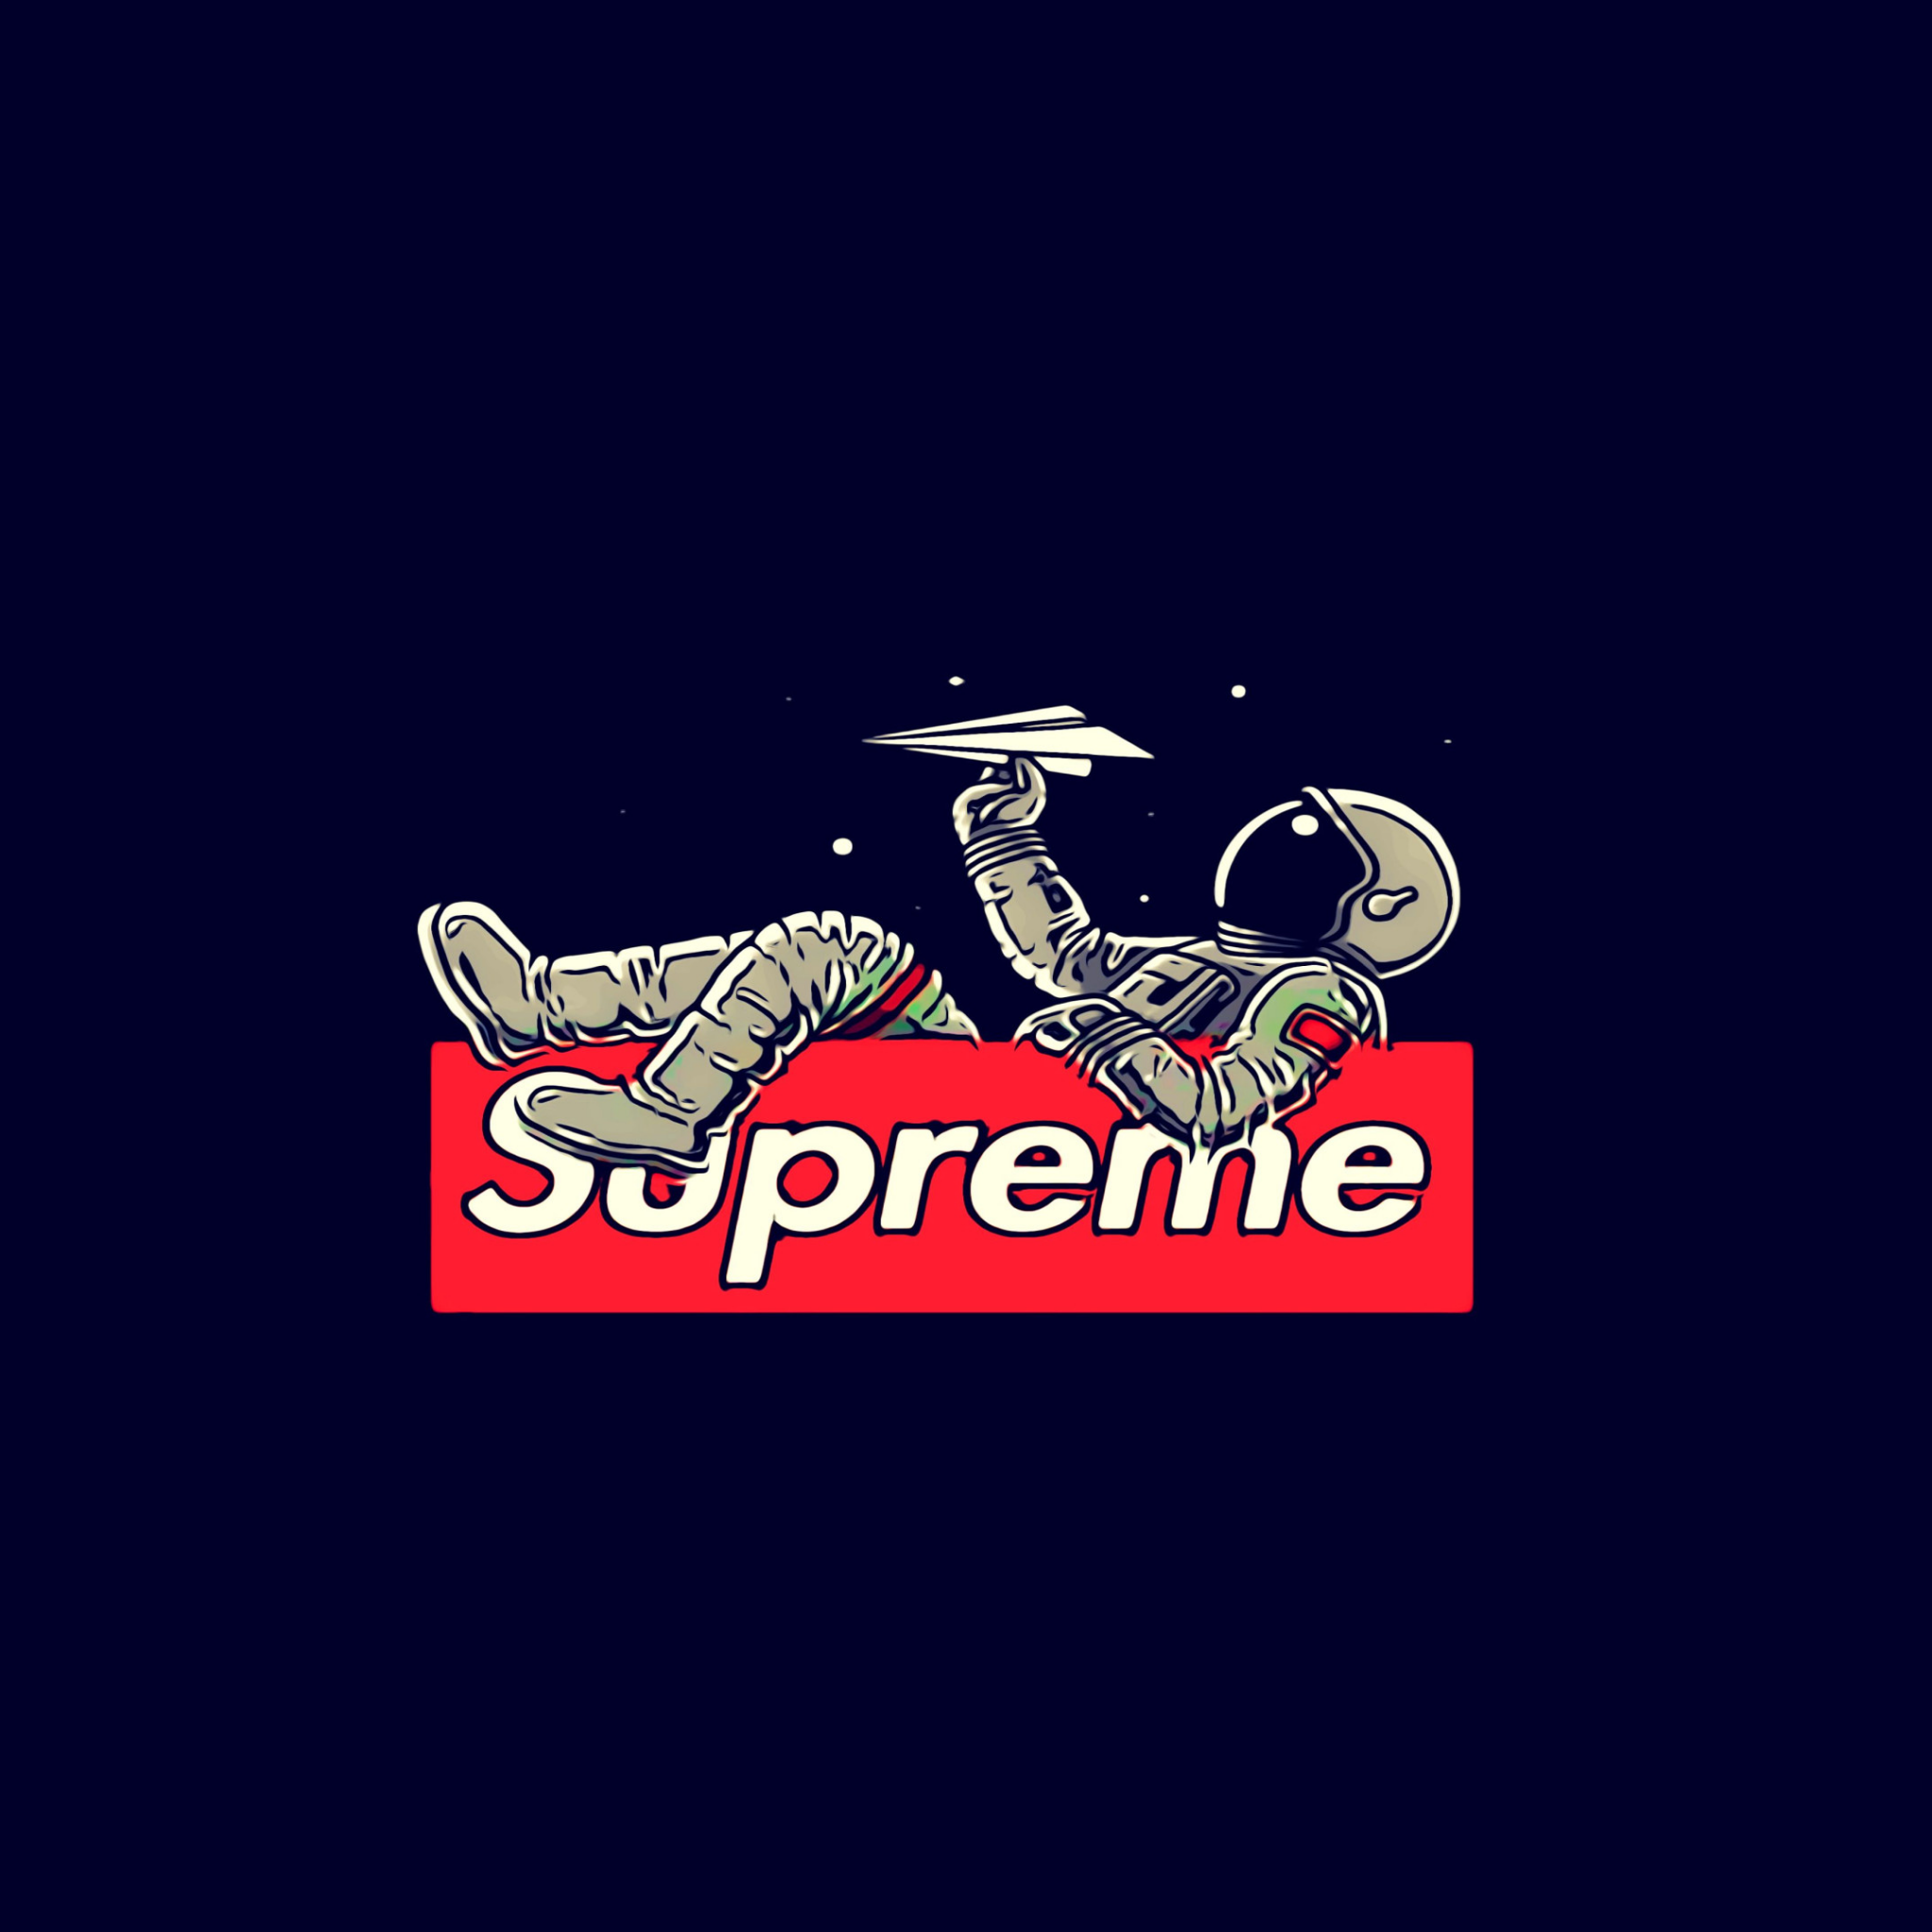 iPhone Wallpaper(s): Brands - Supreme x Gucci x